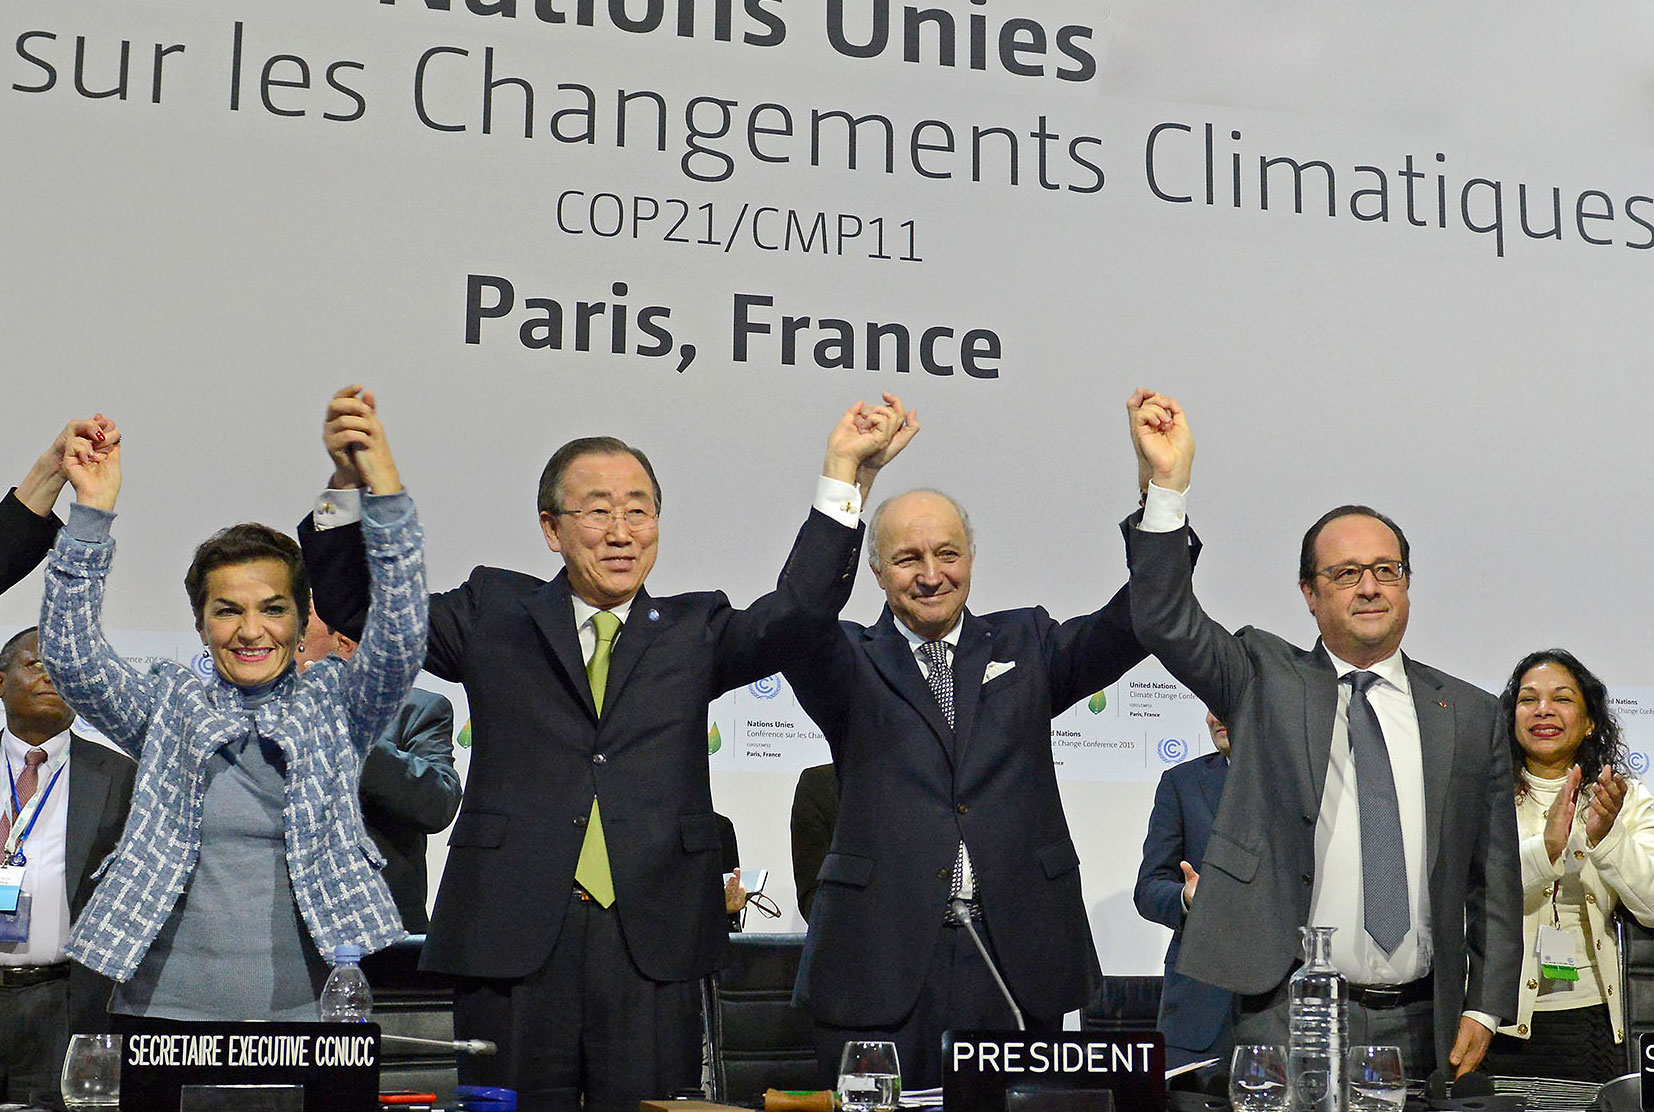 Paris agreement. ООН В Париже. Парижское соглашение по климату 2015. Парижский клуб по климату. The UNFCCC'S Paris Agreement.